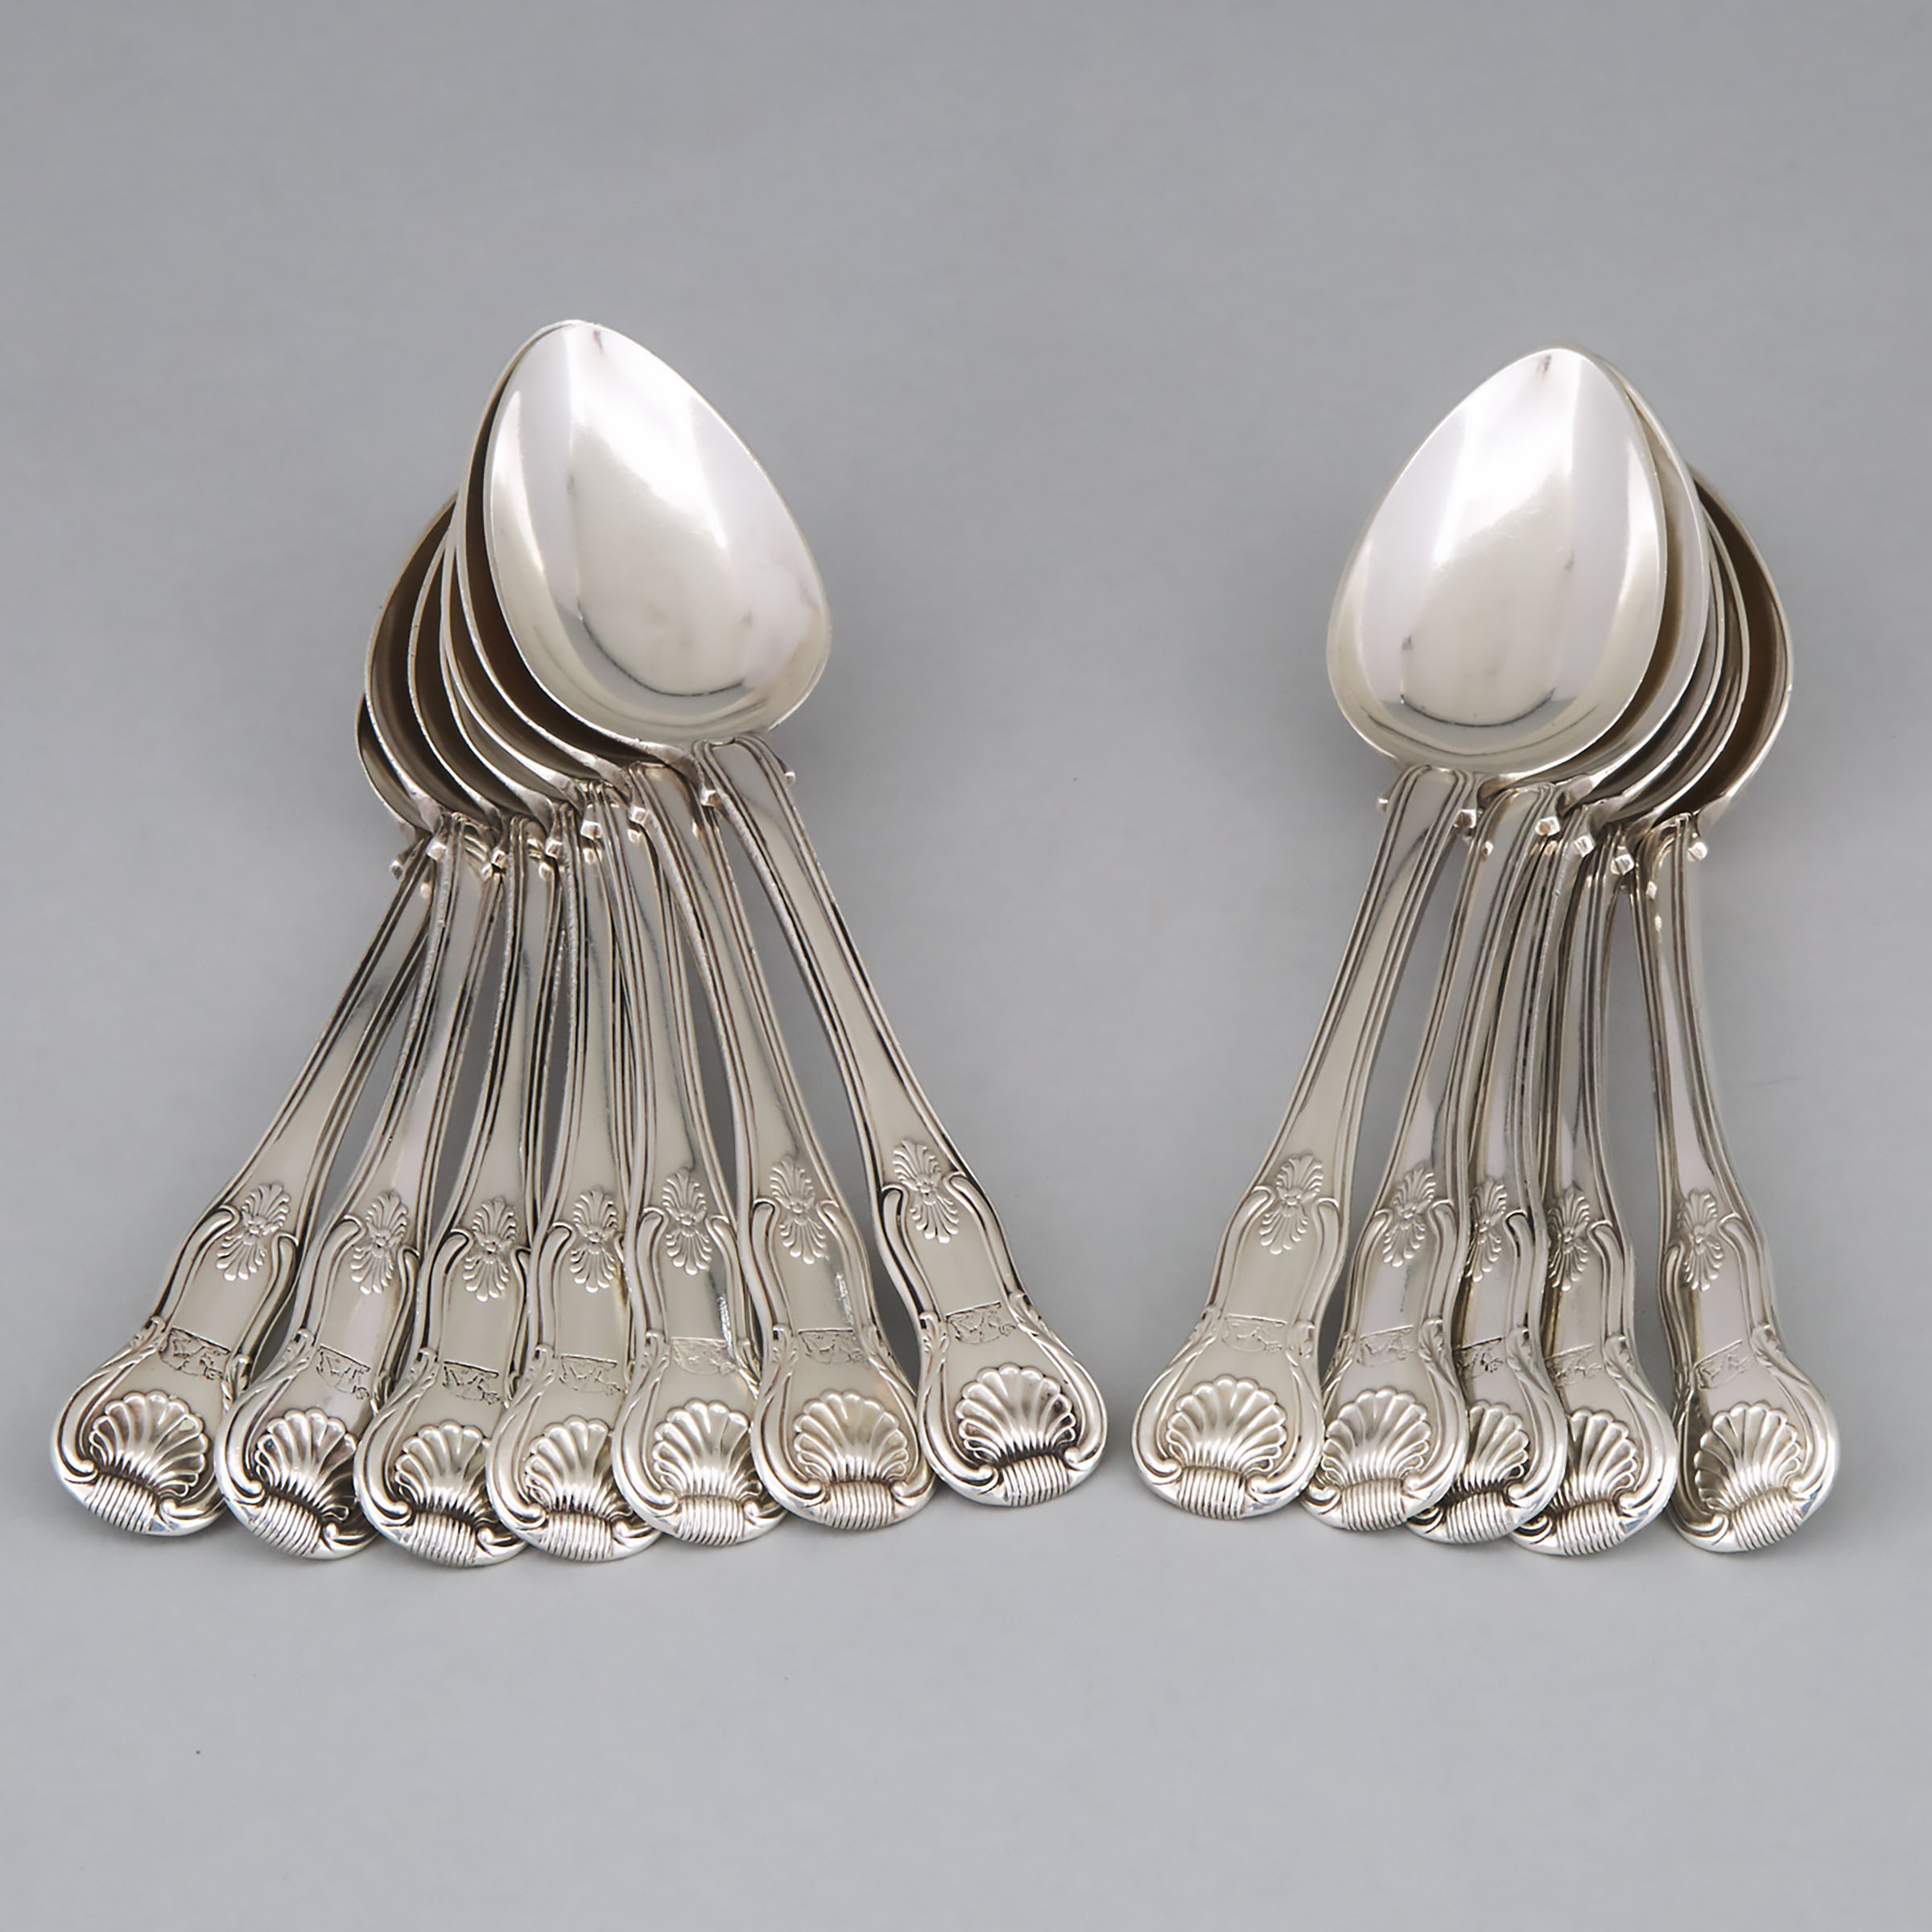 Set of Twelve George IV Silver Kings Pattern Dessert Spoons, Sarah & John William Blake, London, 1820